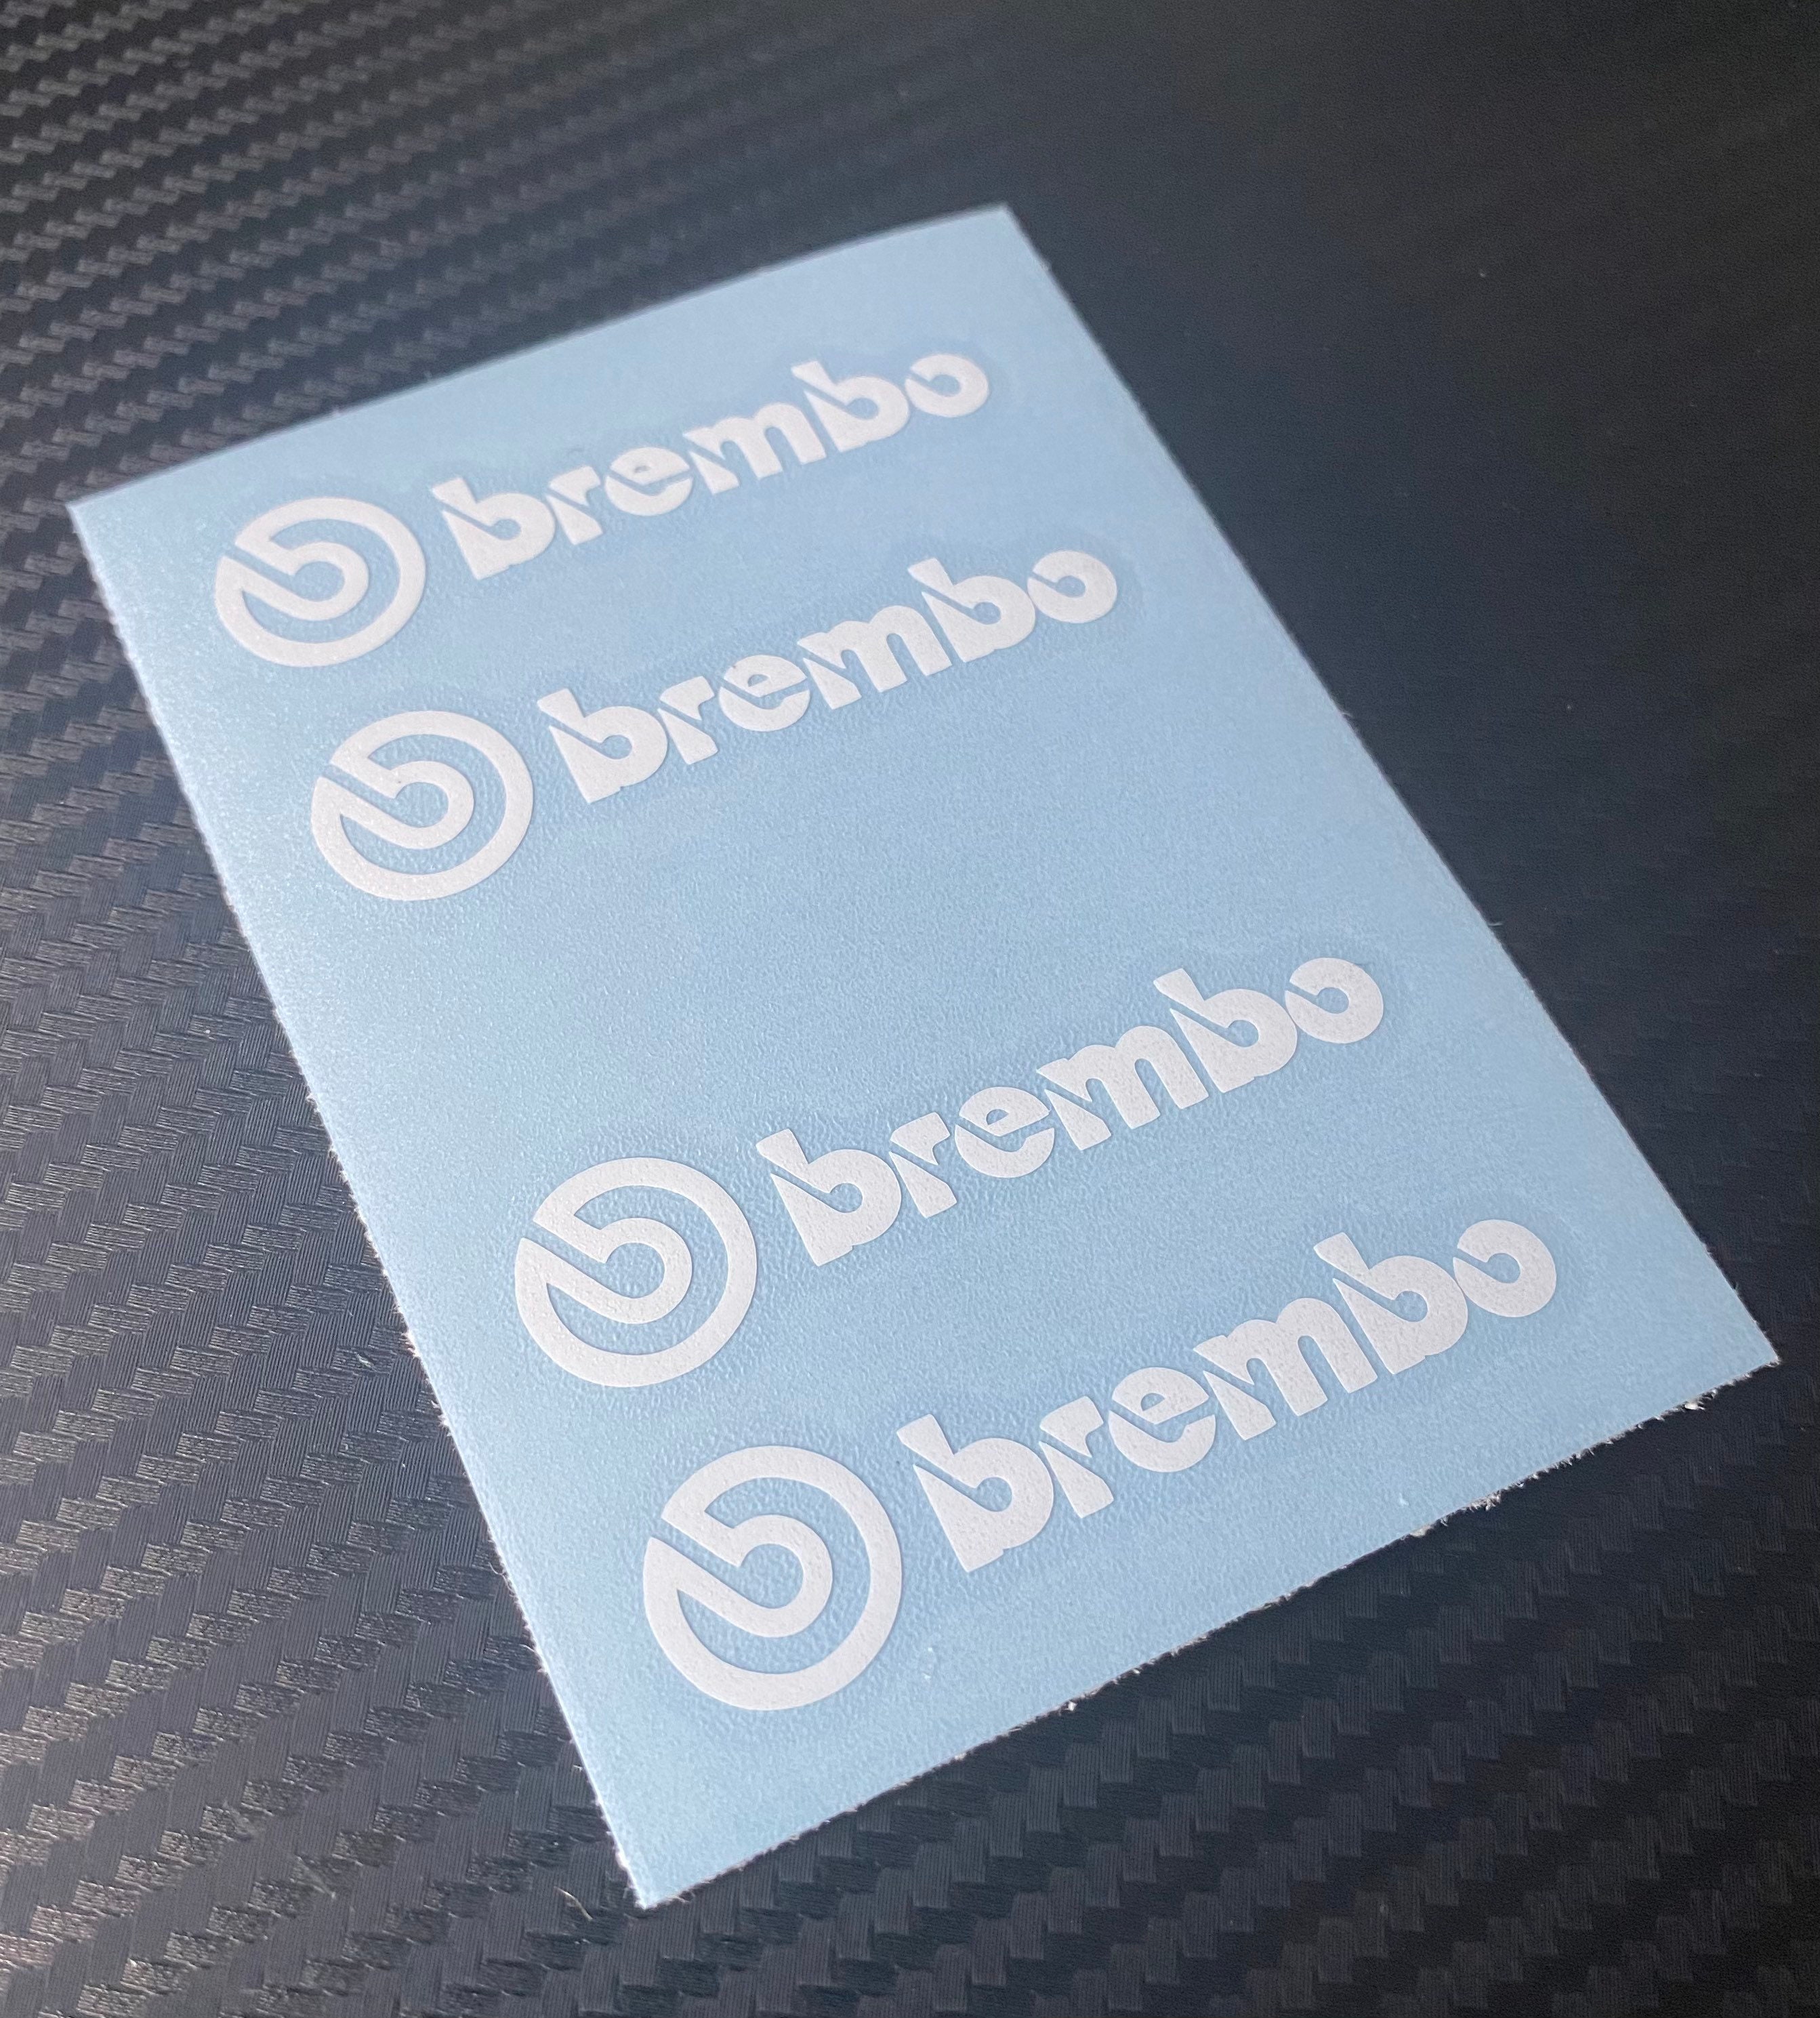 4 Brembo Decals Stickers Vinyl Caliper Multi Color Heat Resistant